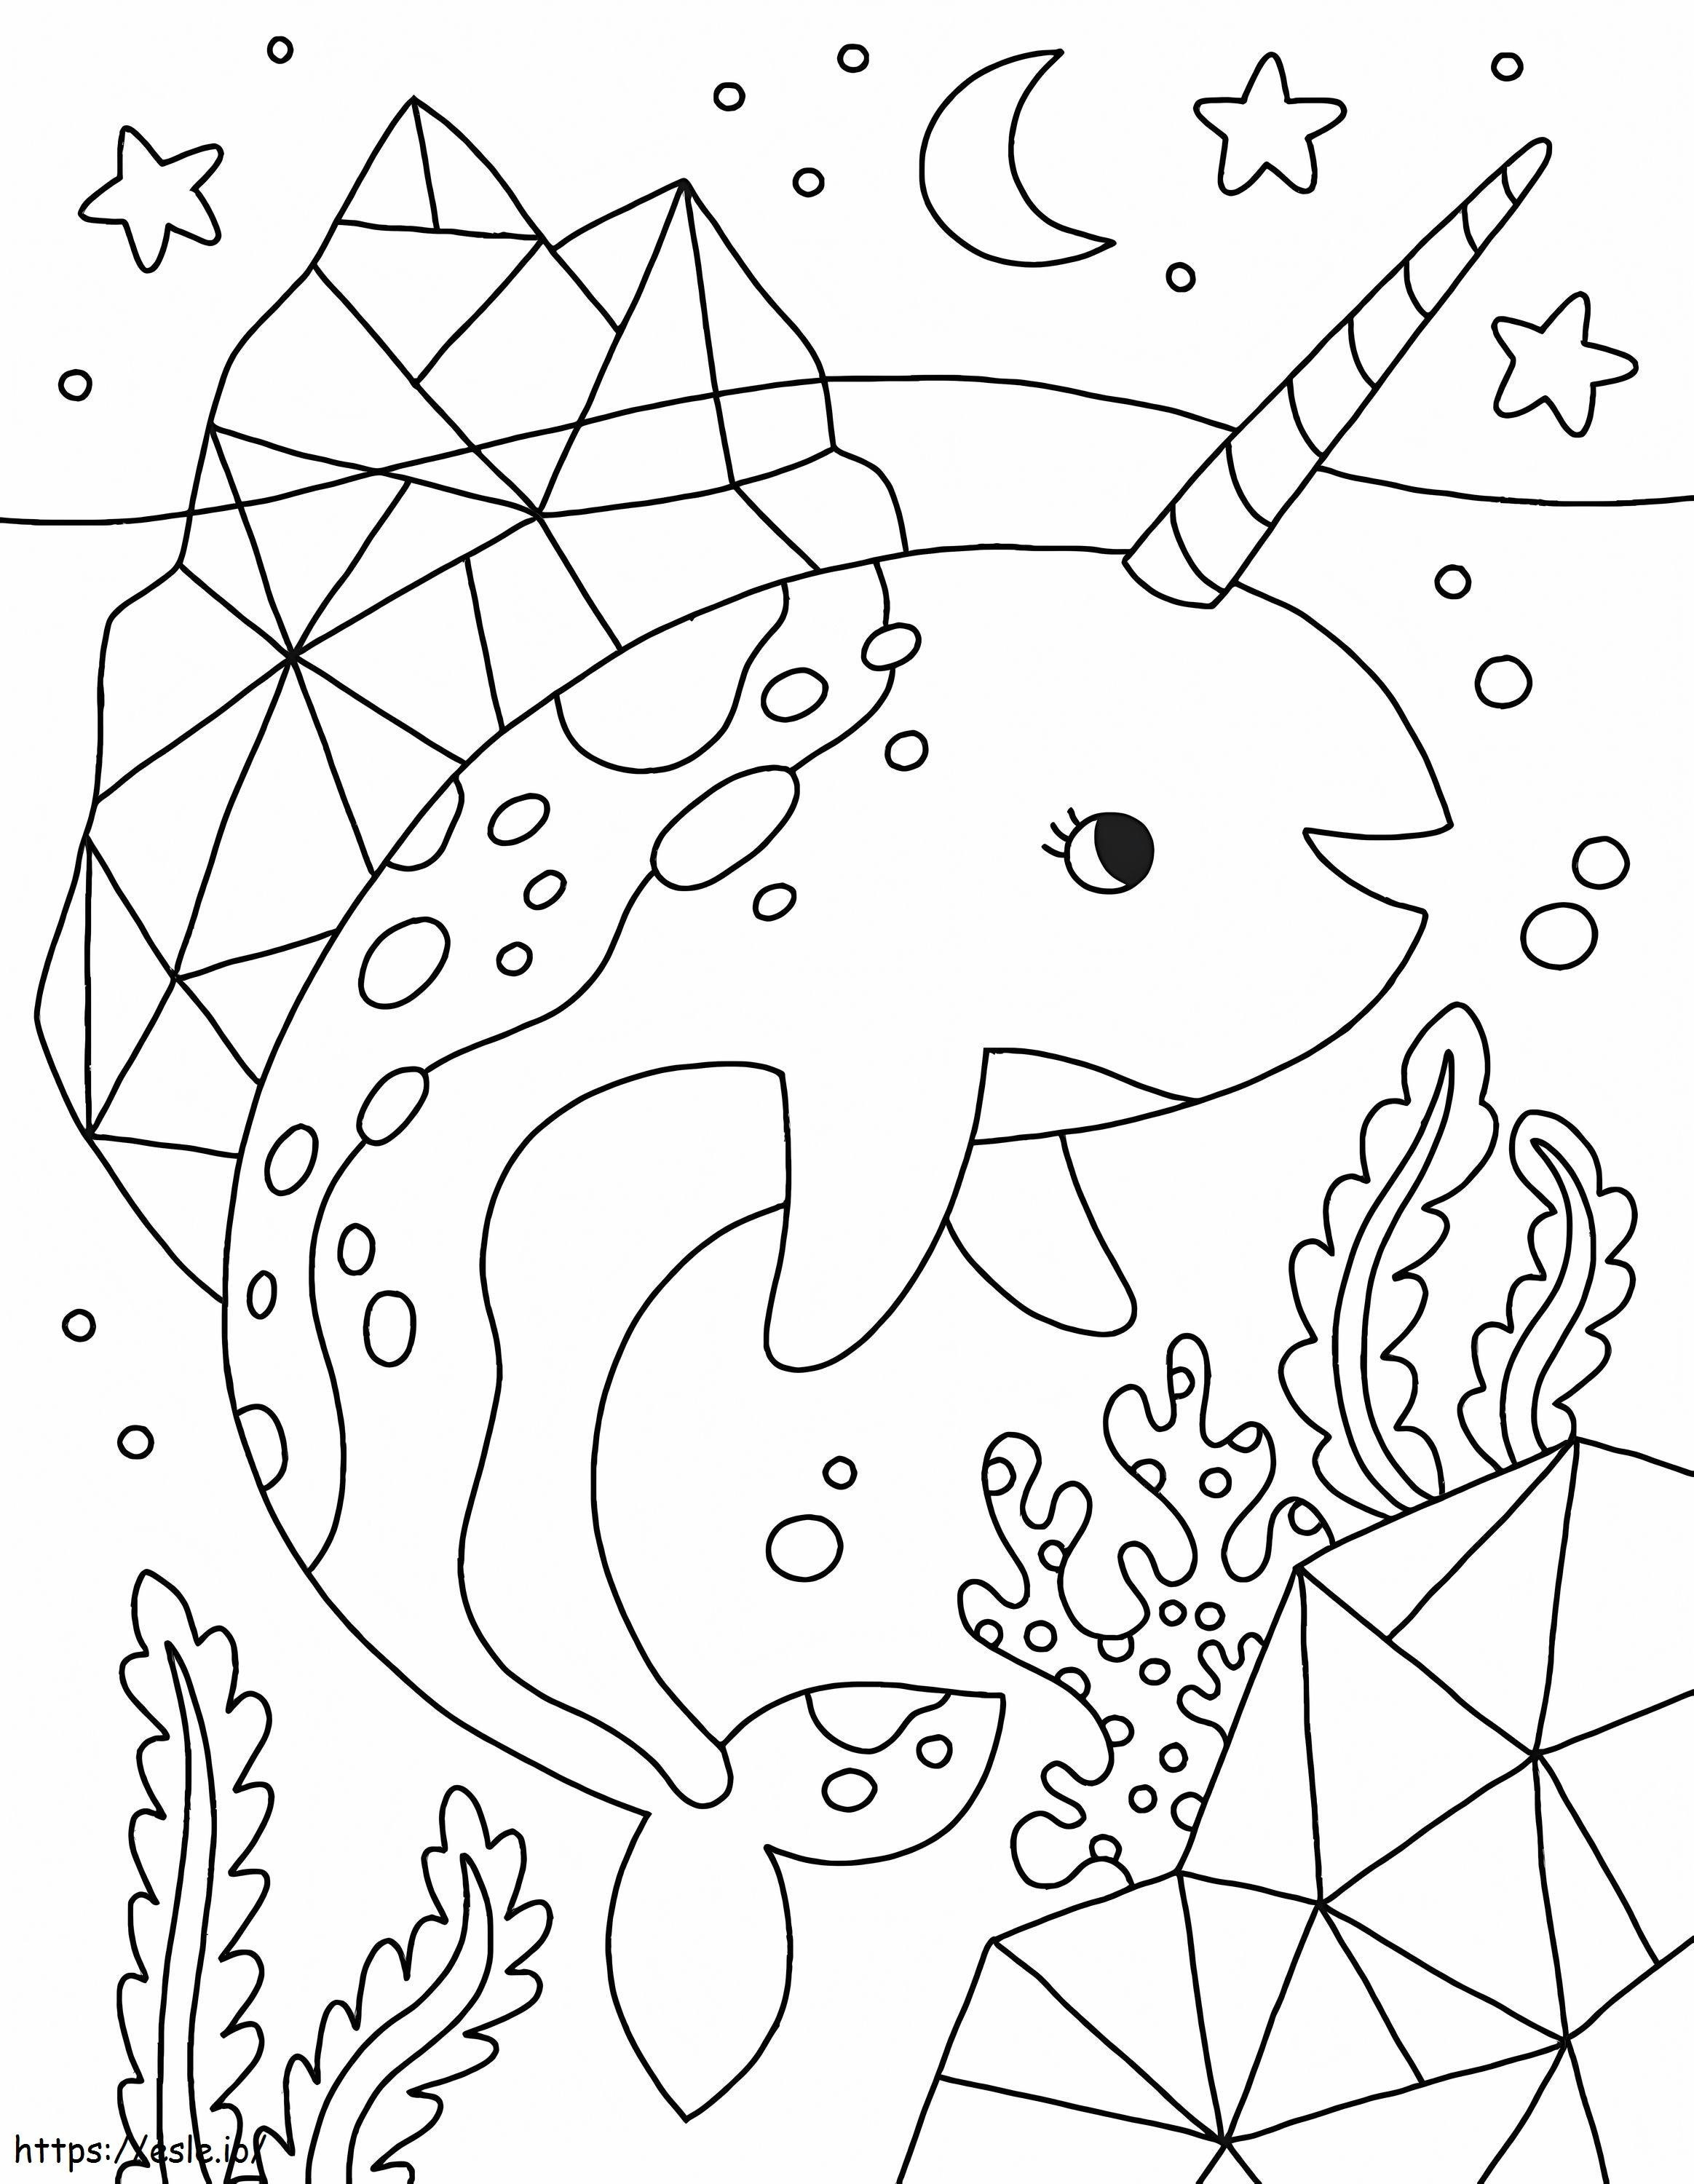 Balena unicorno Kawaii da colorare